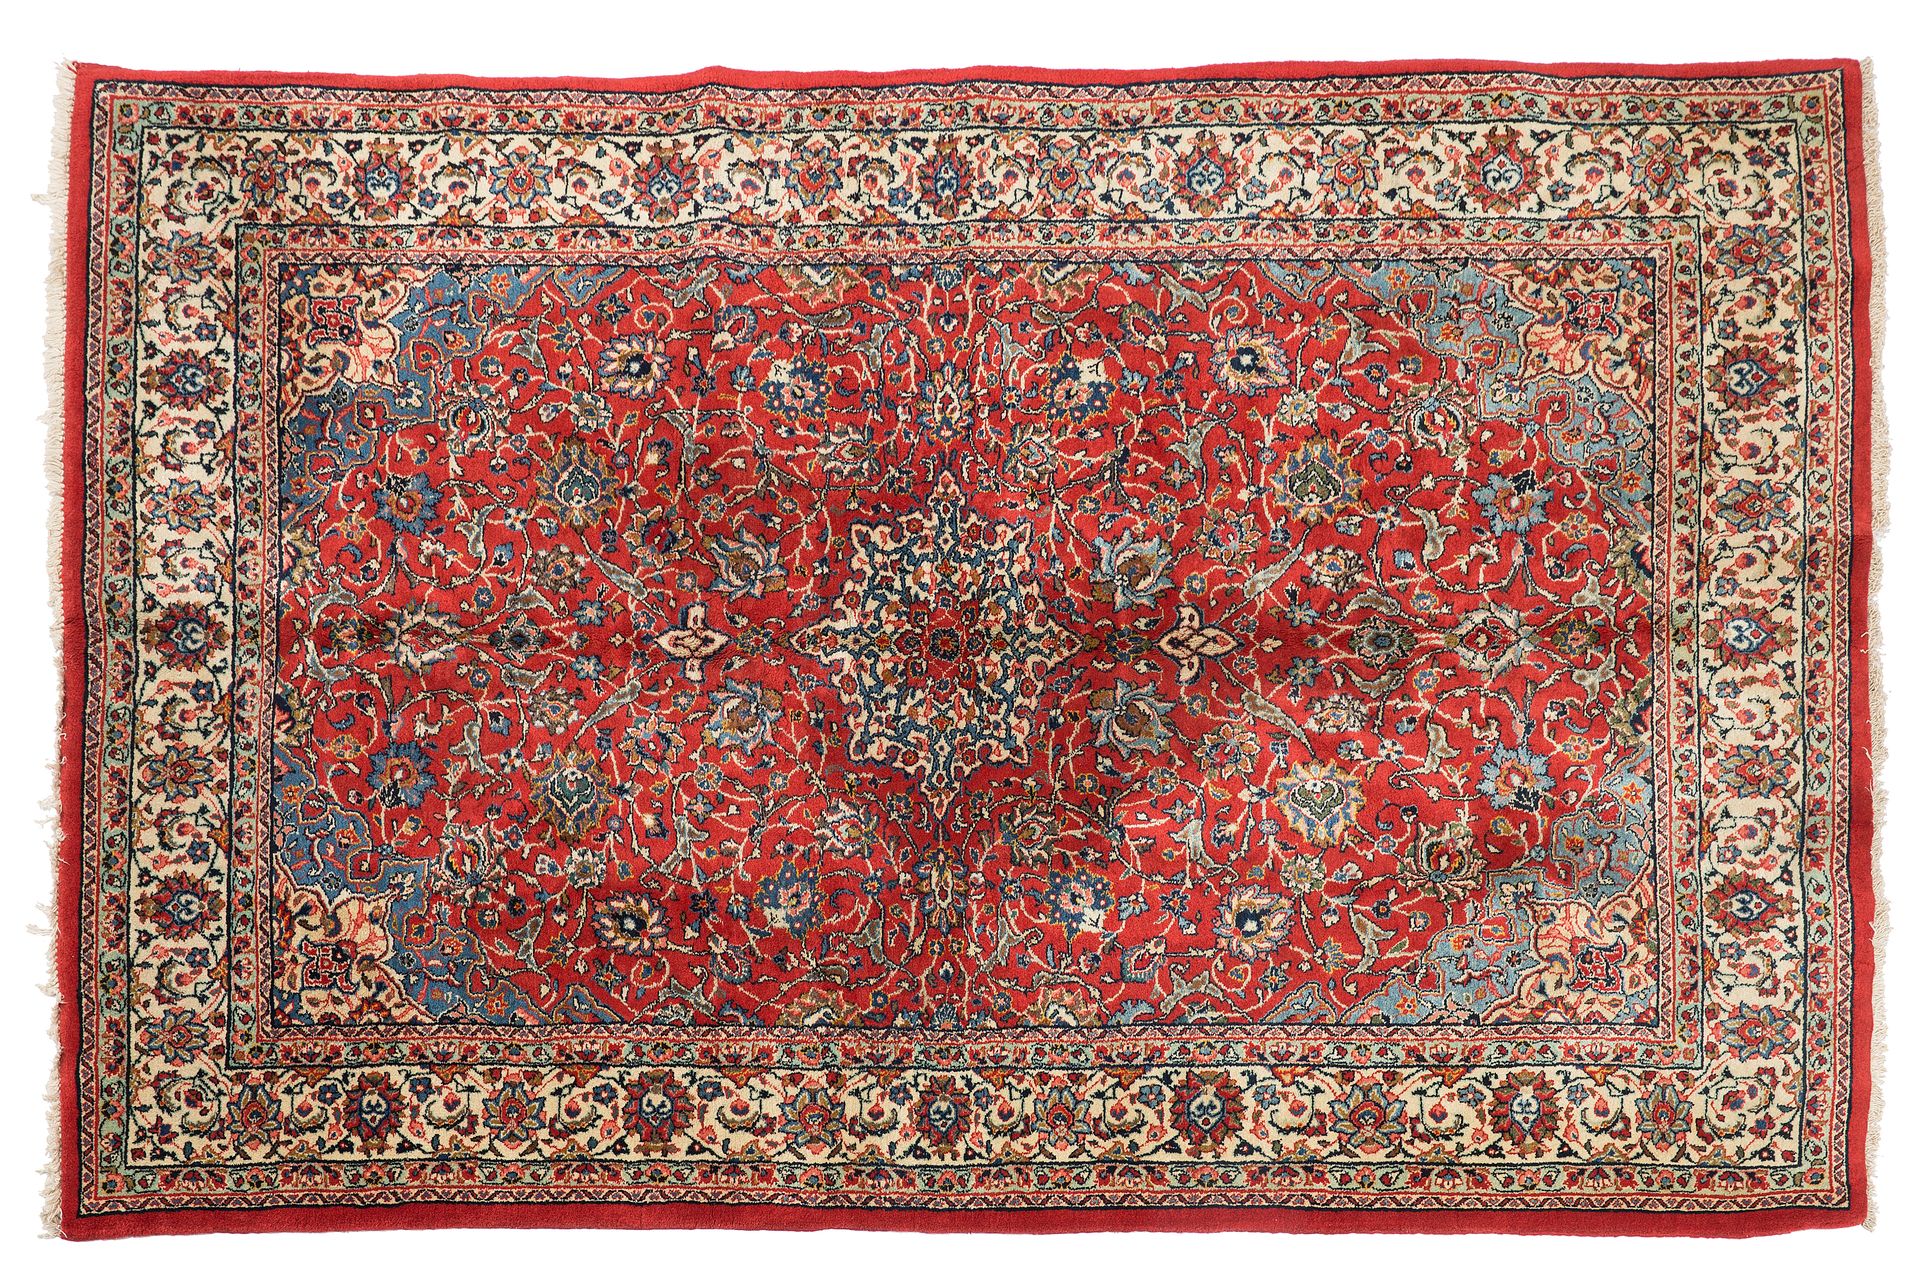 Null 萨鲁克地毯（伊朗），20世纪中期

尺寸：280 x 185厘米。

技术特点 : 羊毛丝绒，棉质基础。

一个由花纹卷轴组成的不可分割的网络，覆盖了&hellip;